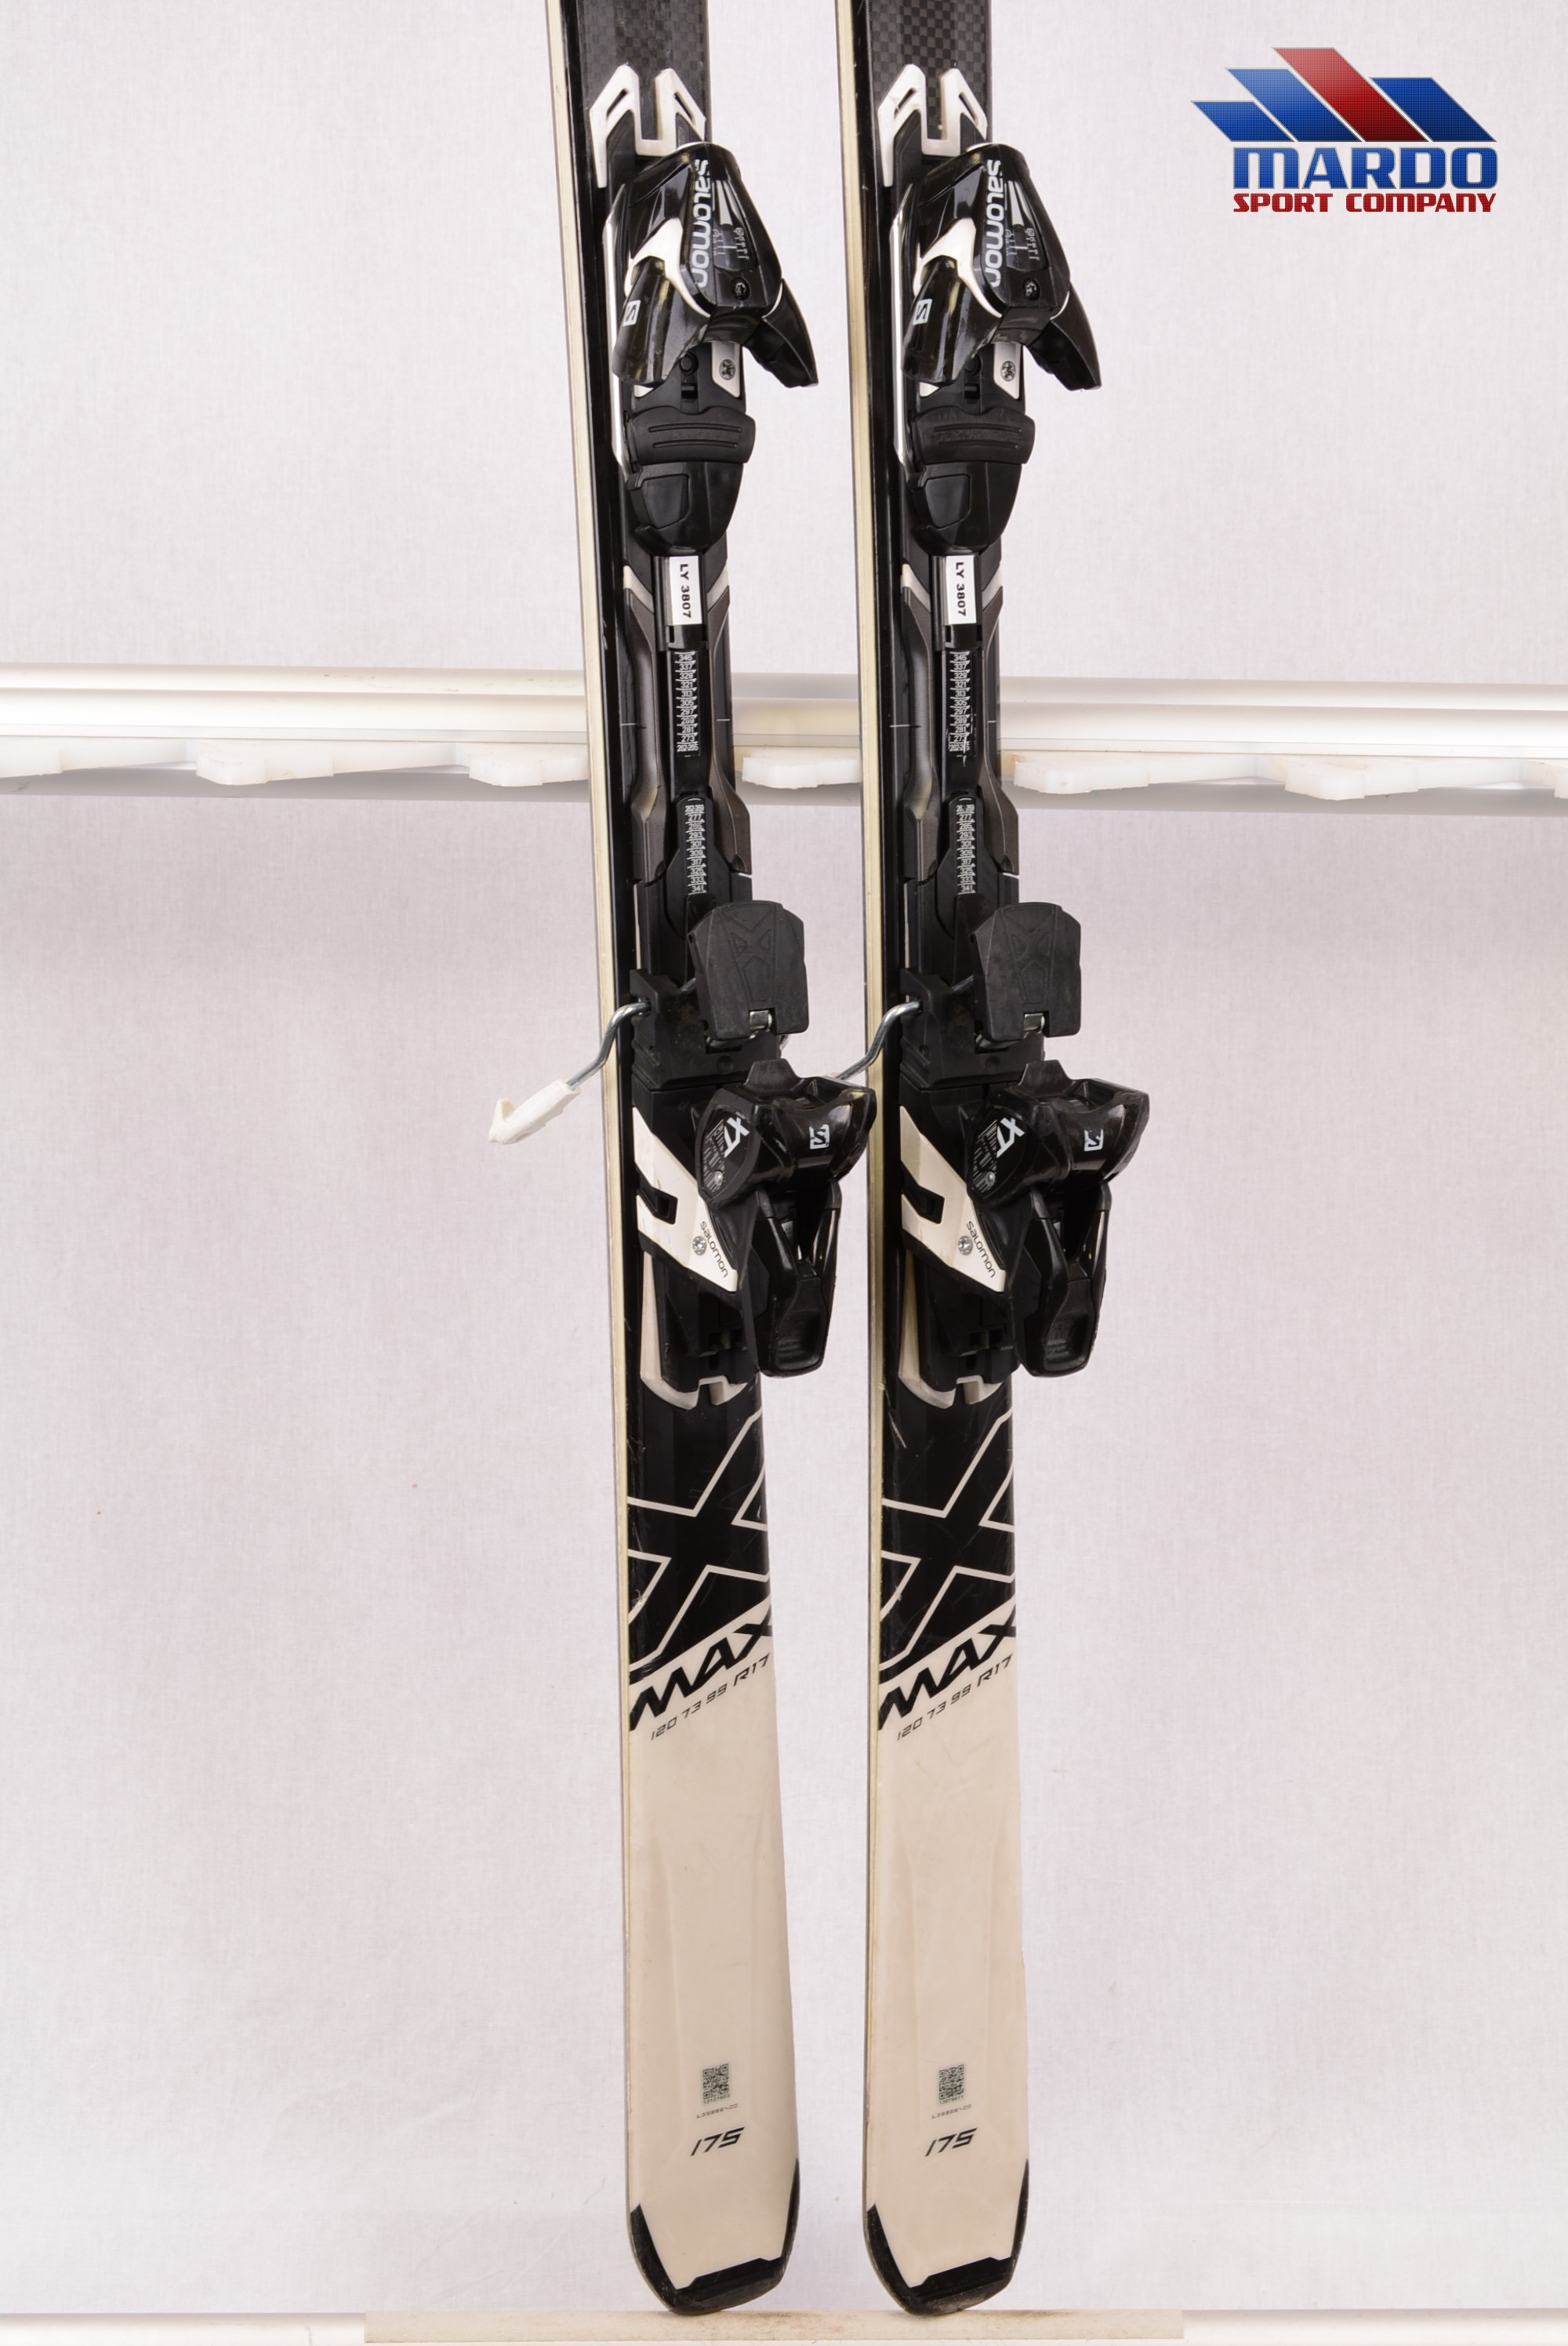 skis SALOMON X-MAX X12 power frame 2019, woodcore, carbon, + XT 12 ( TOP condition ) - Mardosport.com